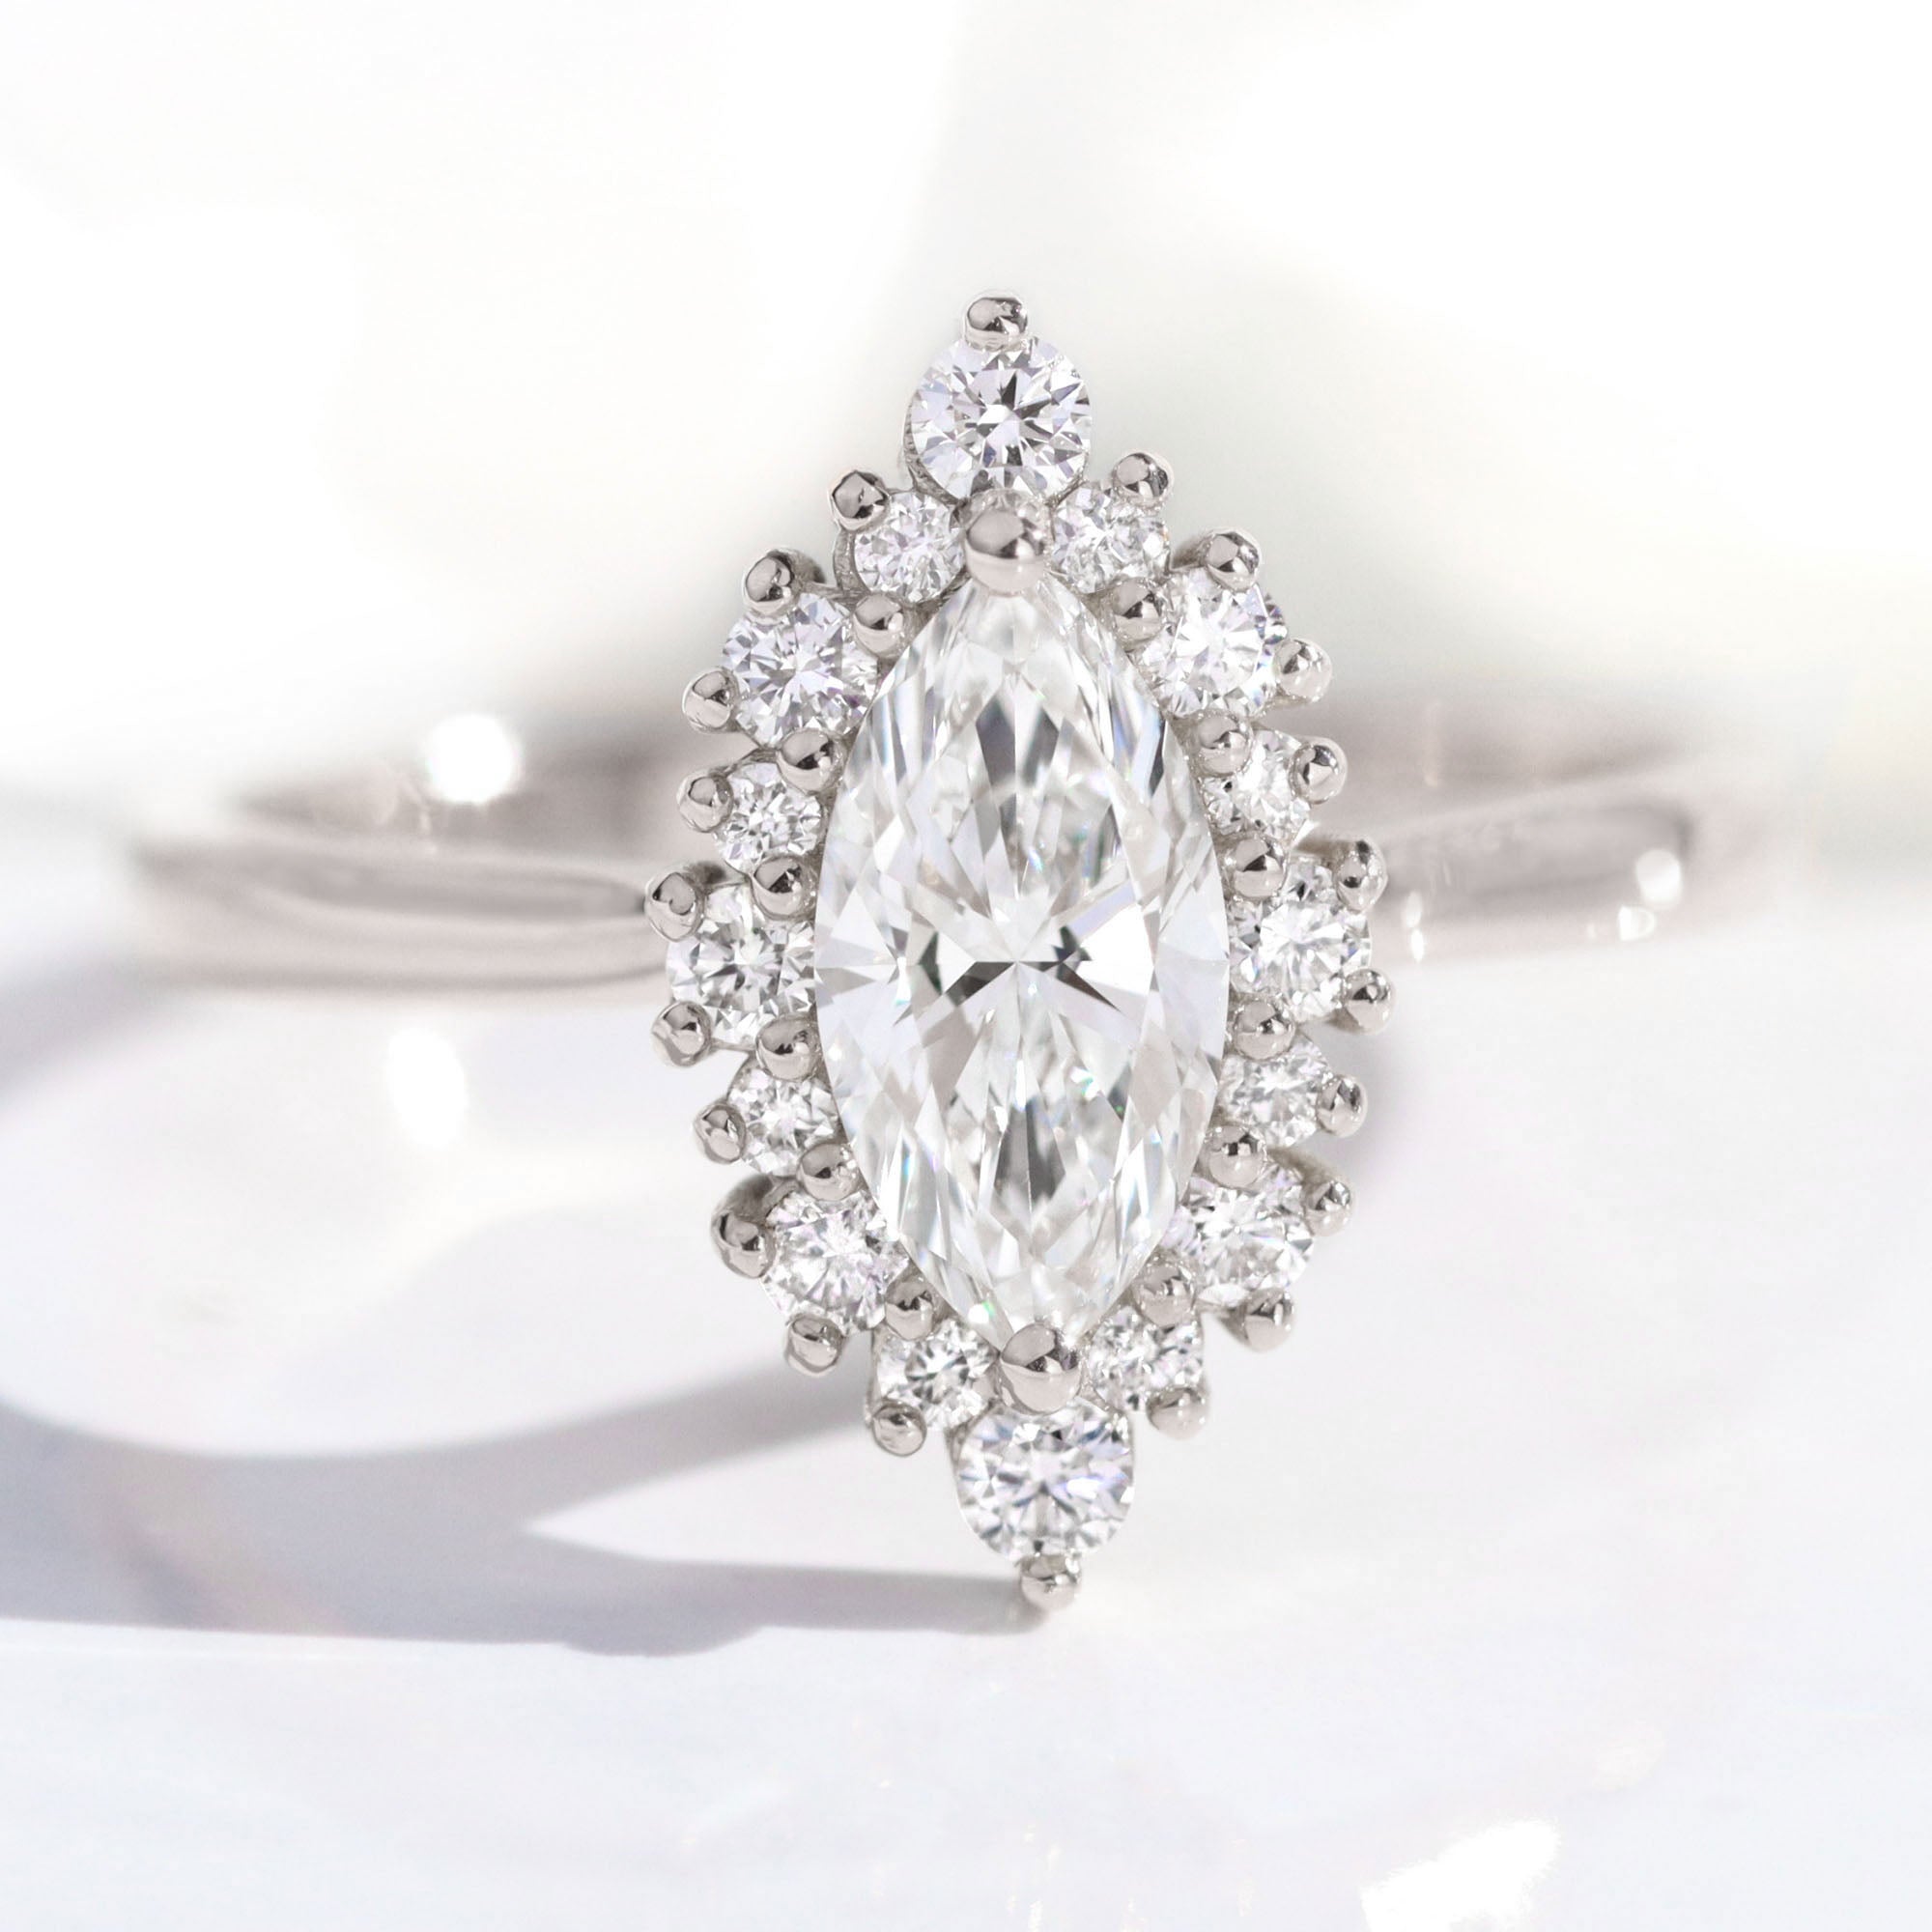 lab diamond ring white gold marquise diamond halo engagement ring La More Design Jewelry